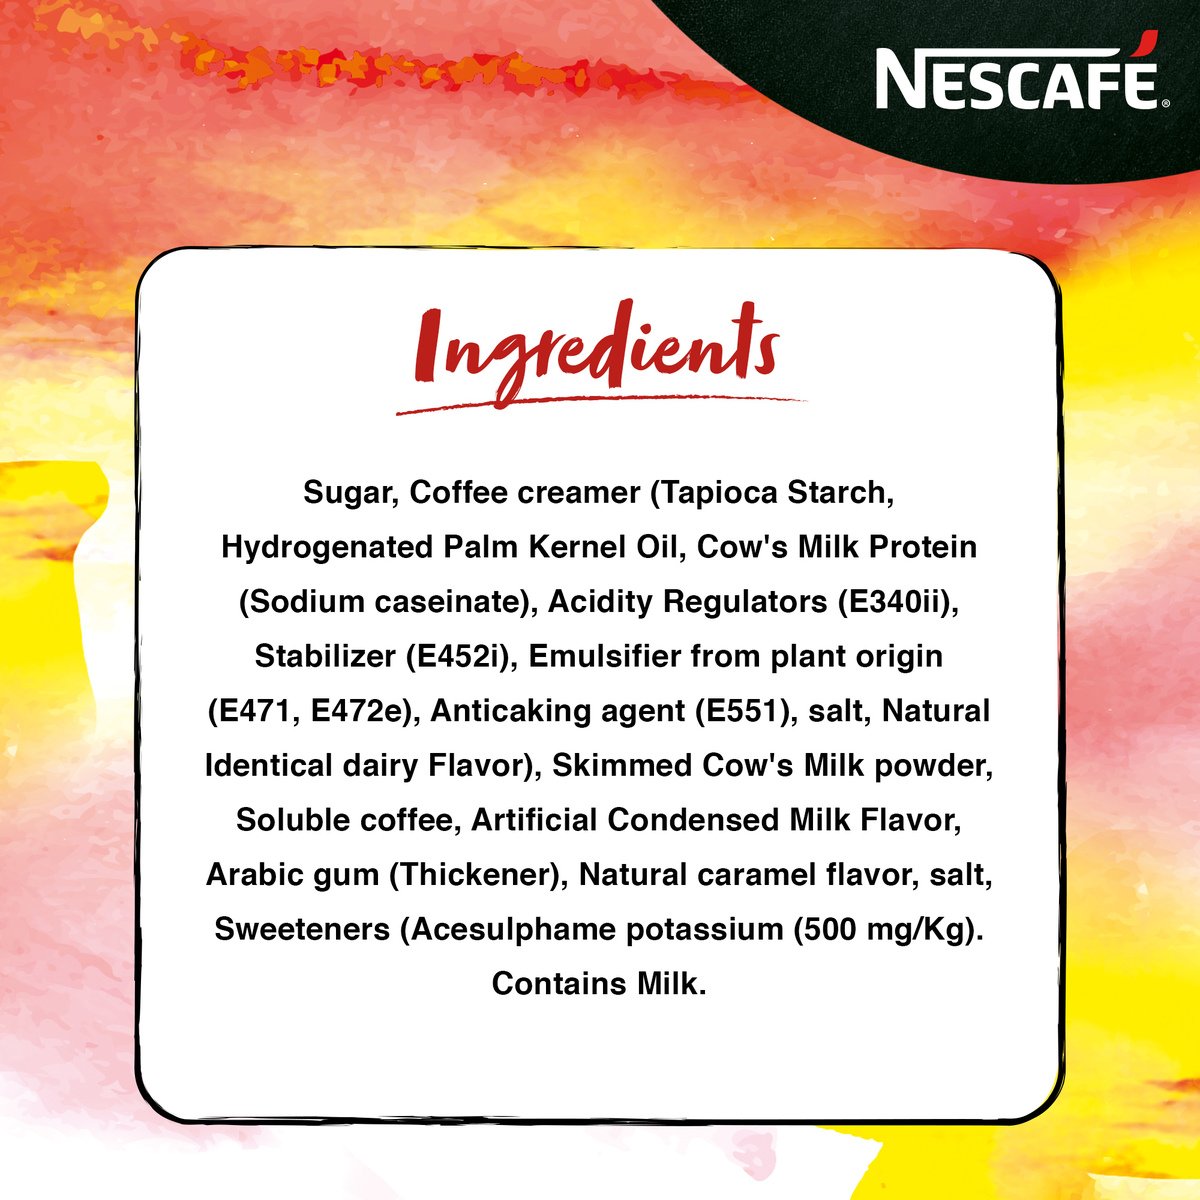 Nescafe 3in1 Spanish Latte Coffee Mix 10 x 22 g